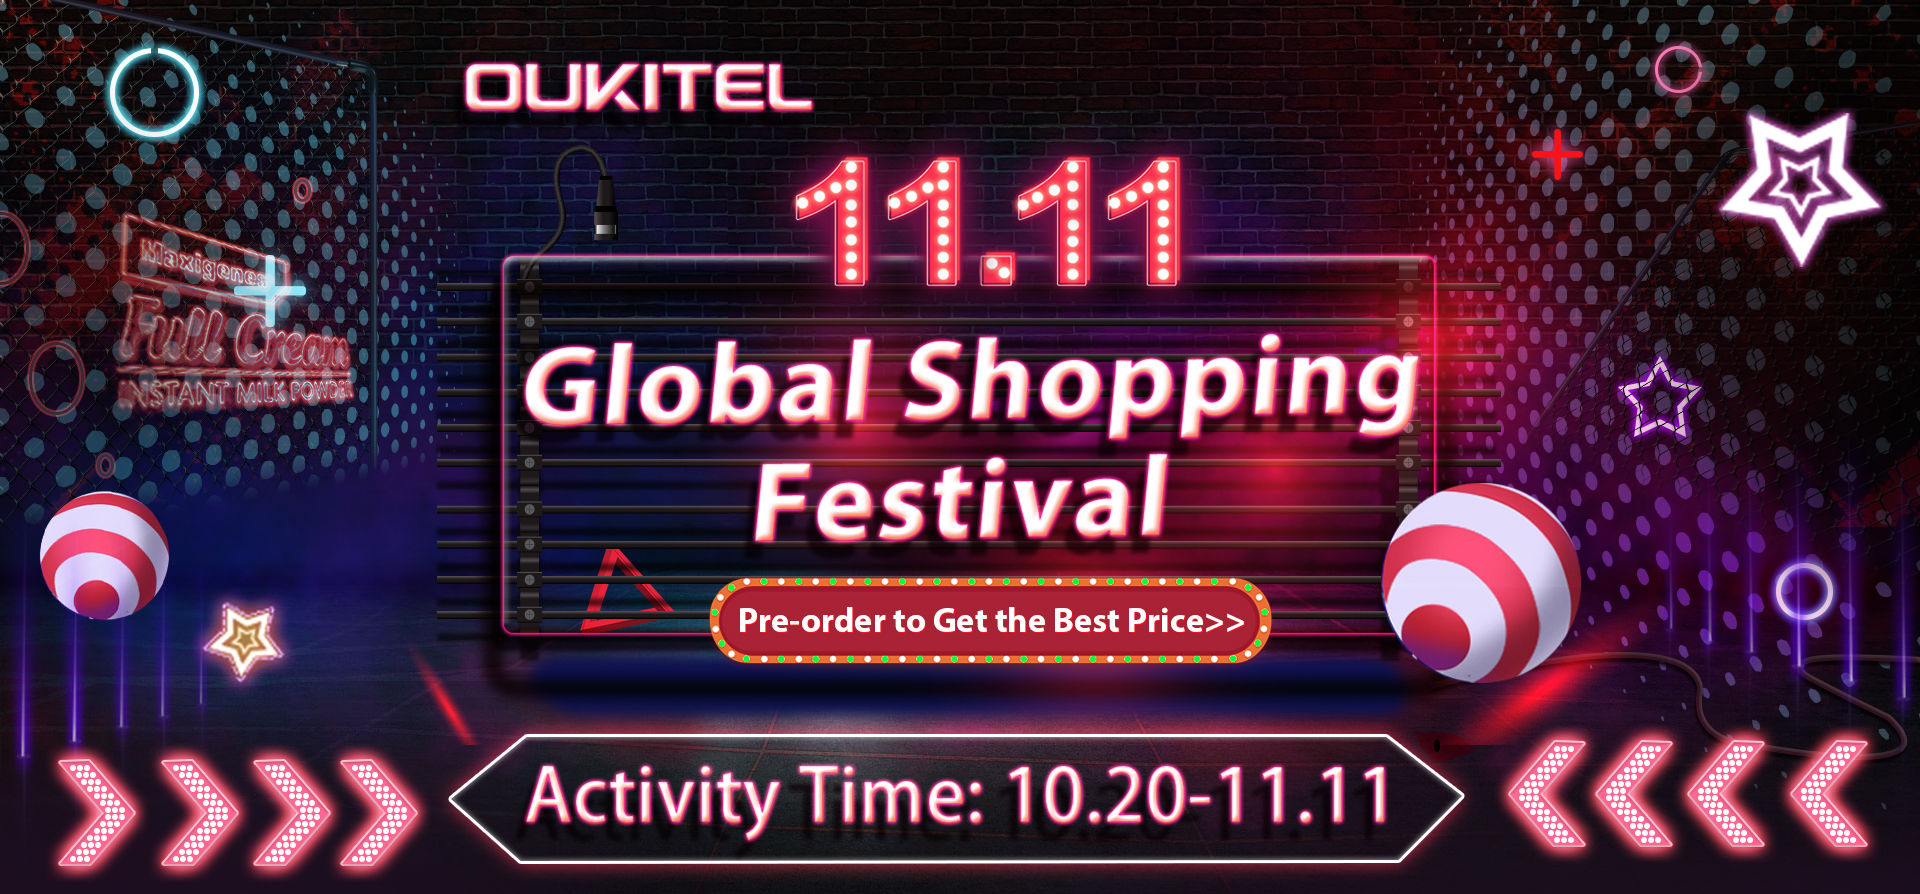 OUKITEL 11.11 Brand sale.jpg